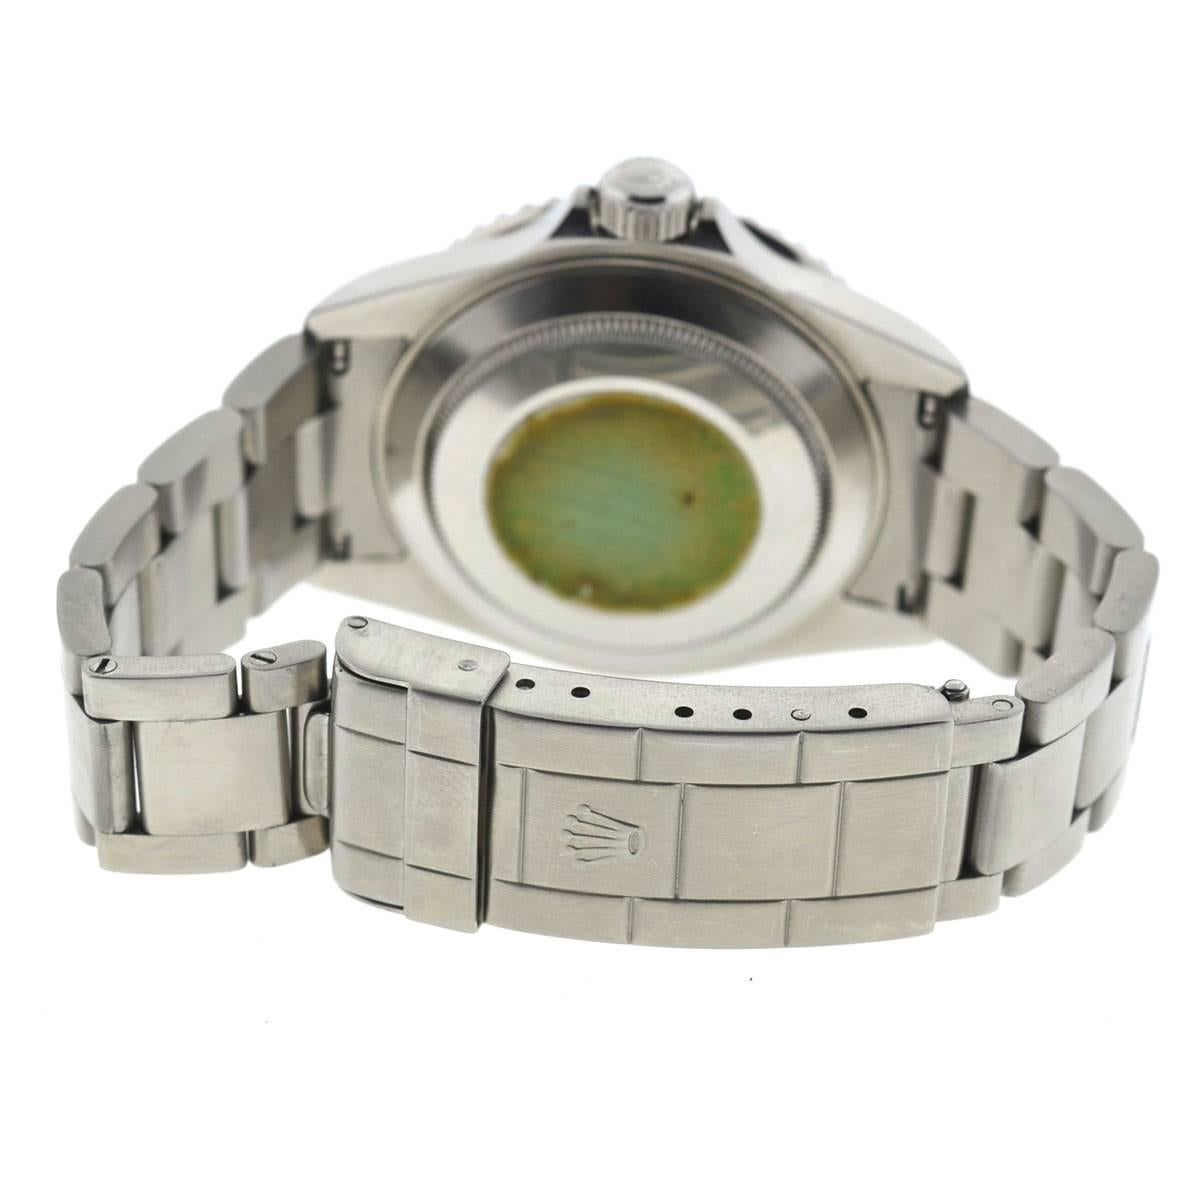 Rolex Stainless Steel Kermit Submariner Automatic Wristwatch Ref 16610LV In Excellent Condition In Boca Raton, FL